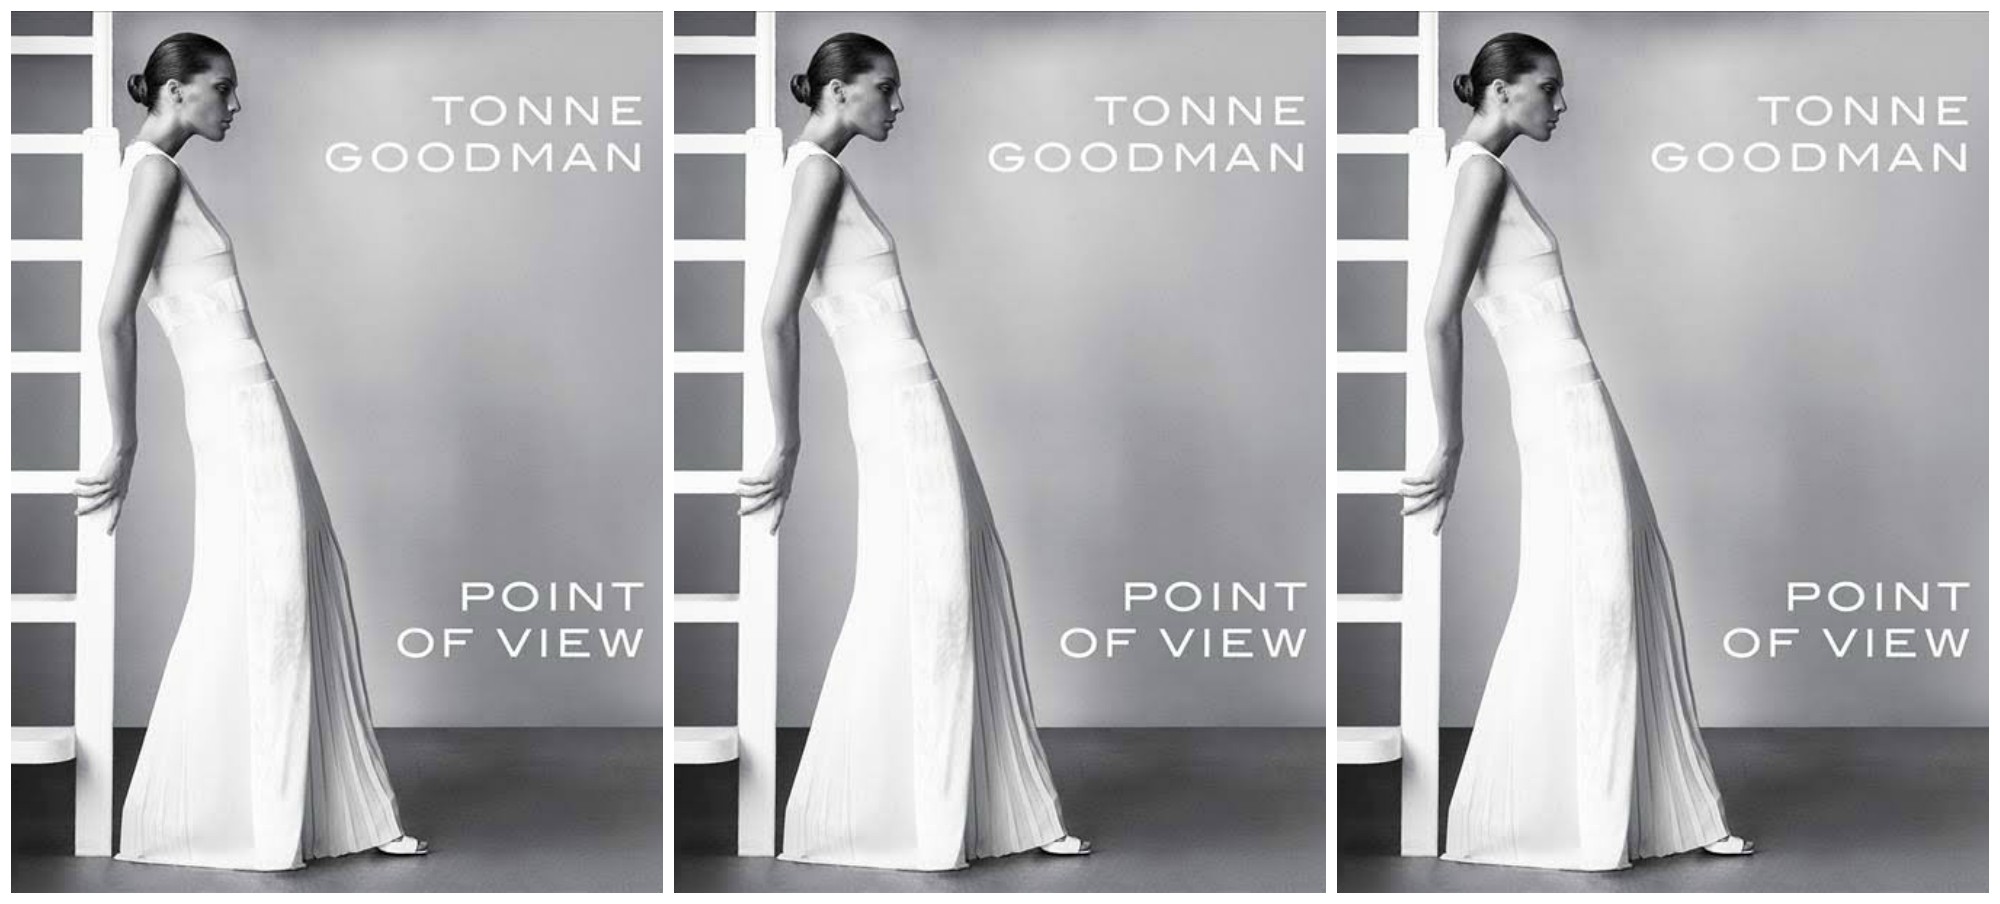 Бывший директор моды Vogue Тонн Гудман выпустила книгу